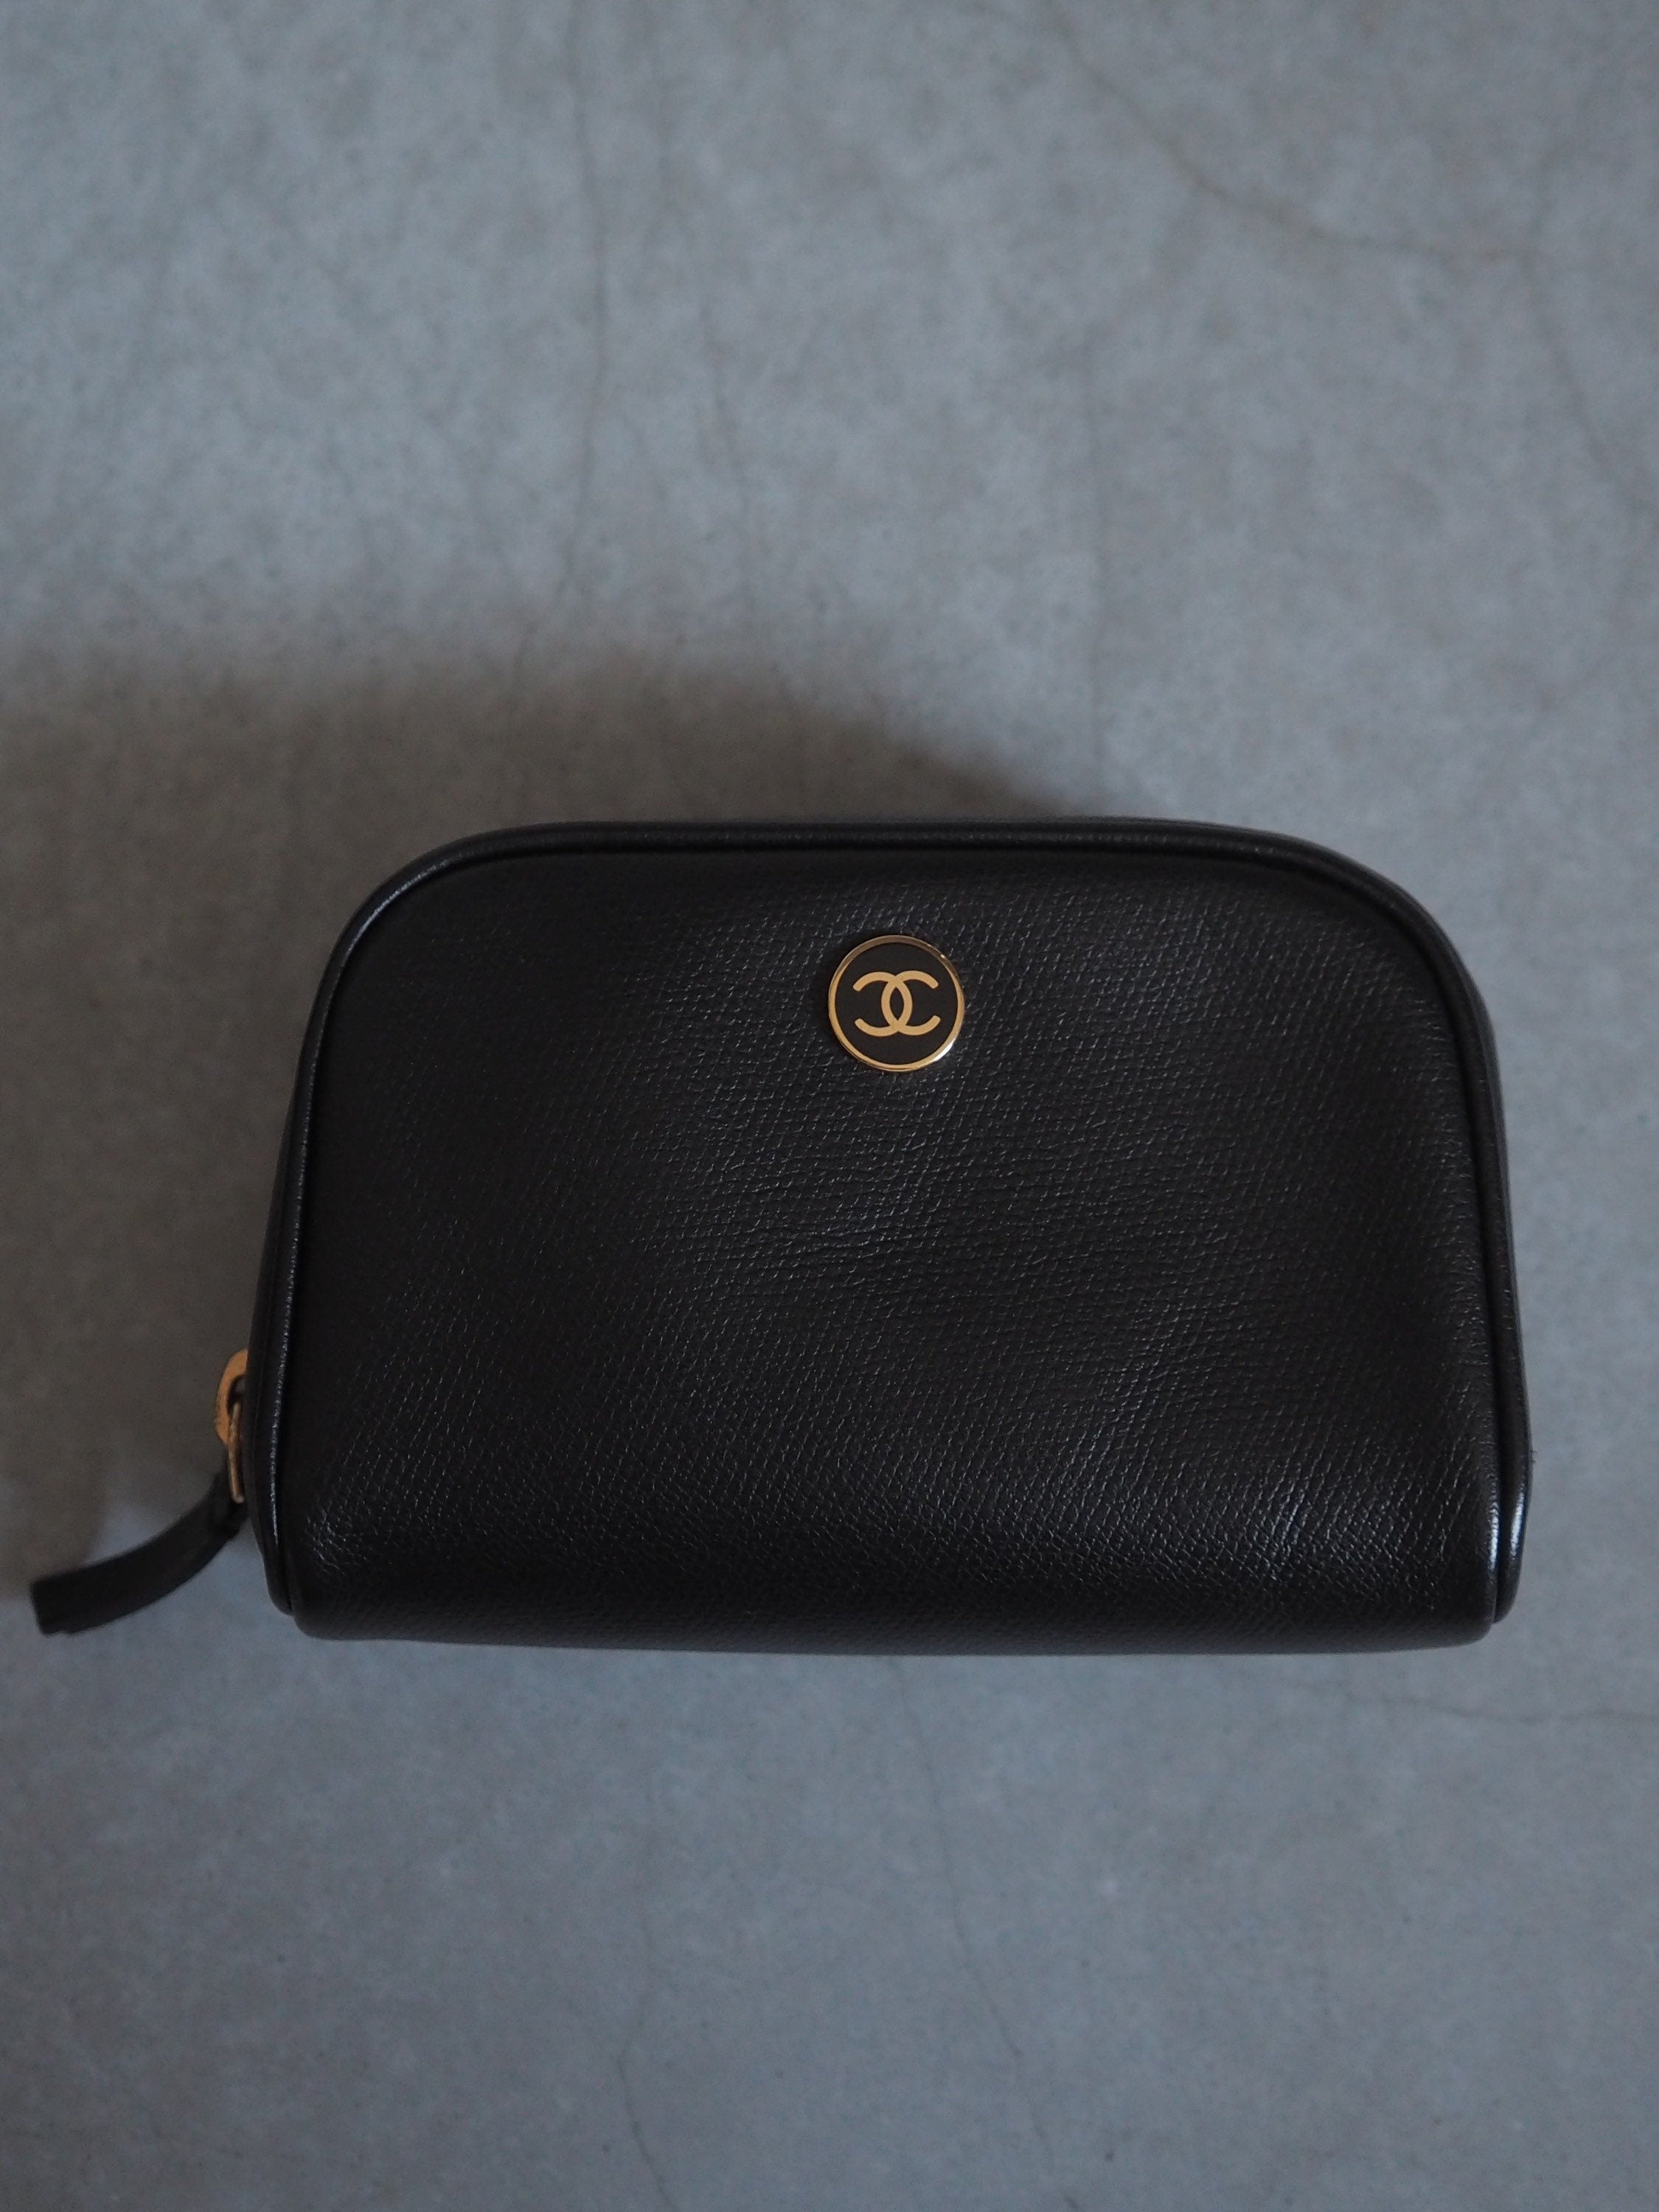 CHANEL COCO Button Pouch Purse Leather Black Authentic Vintage Box